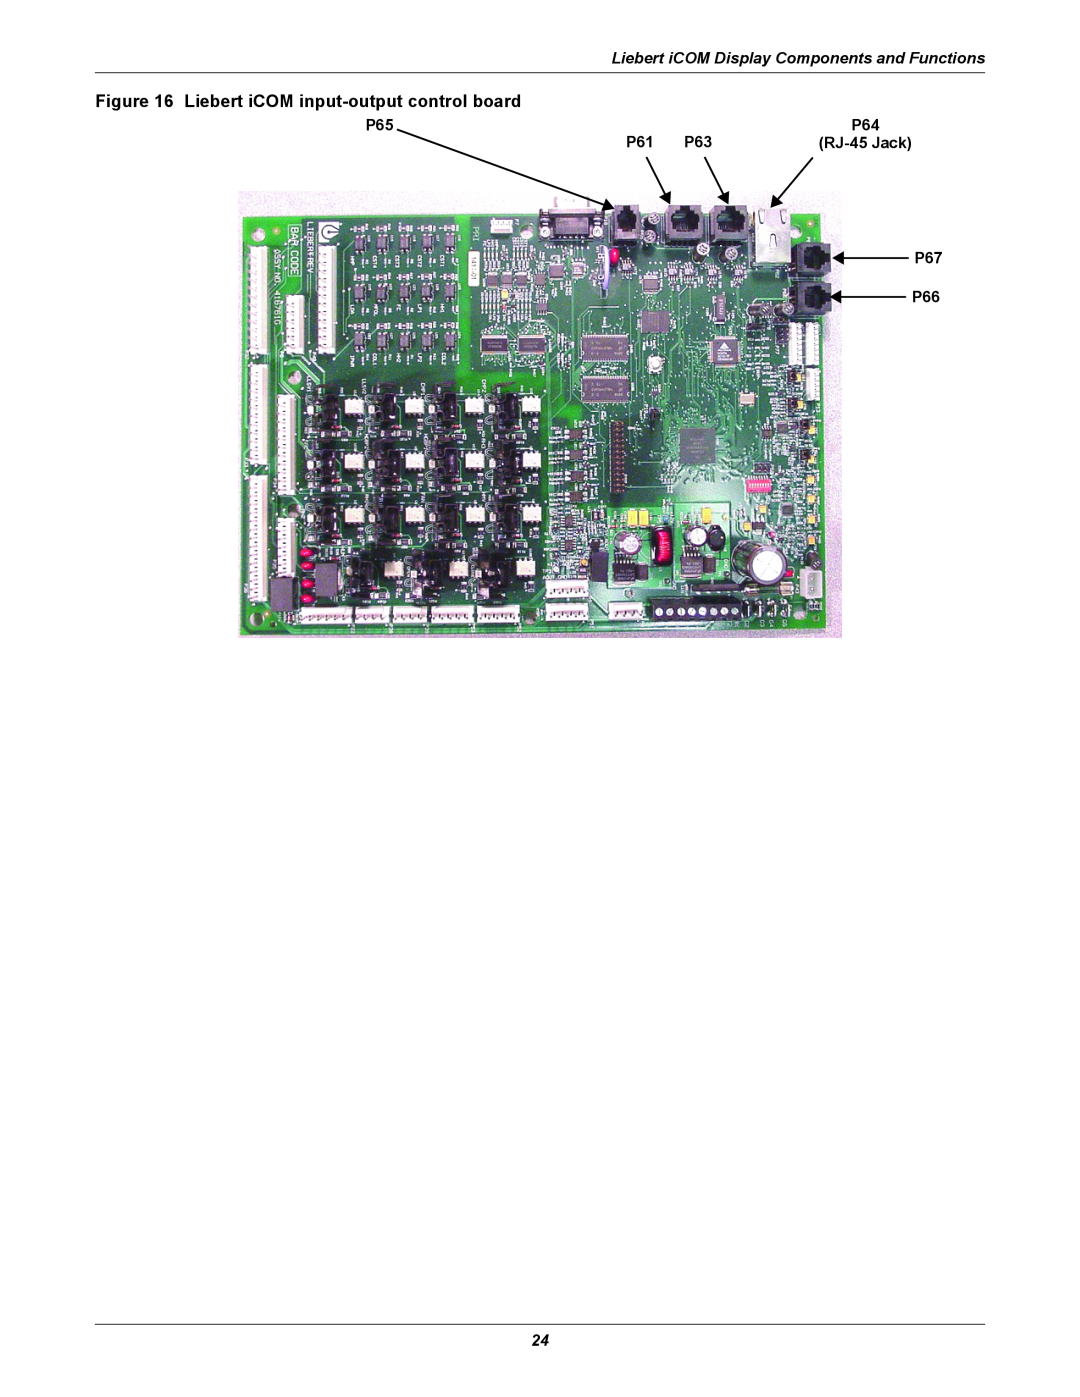 Emerson 3000/ITR manual Liebert iCOM input-outputcontrol board, Liebert iCOM Display Components and Functions 